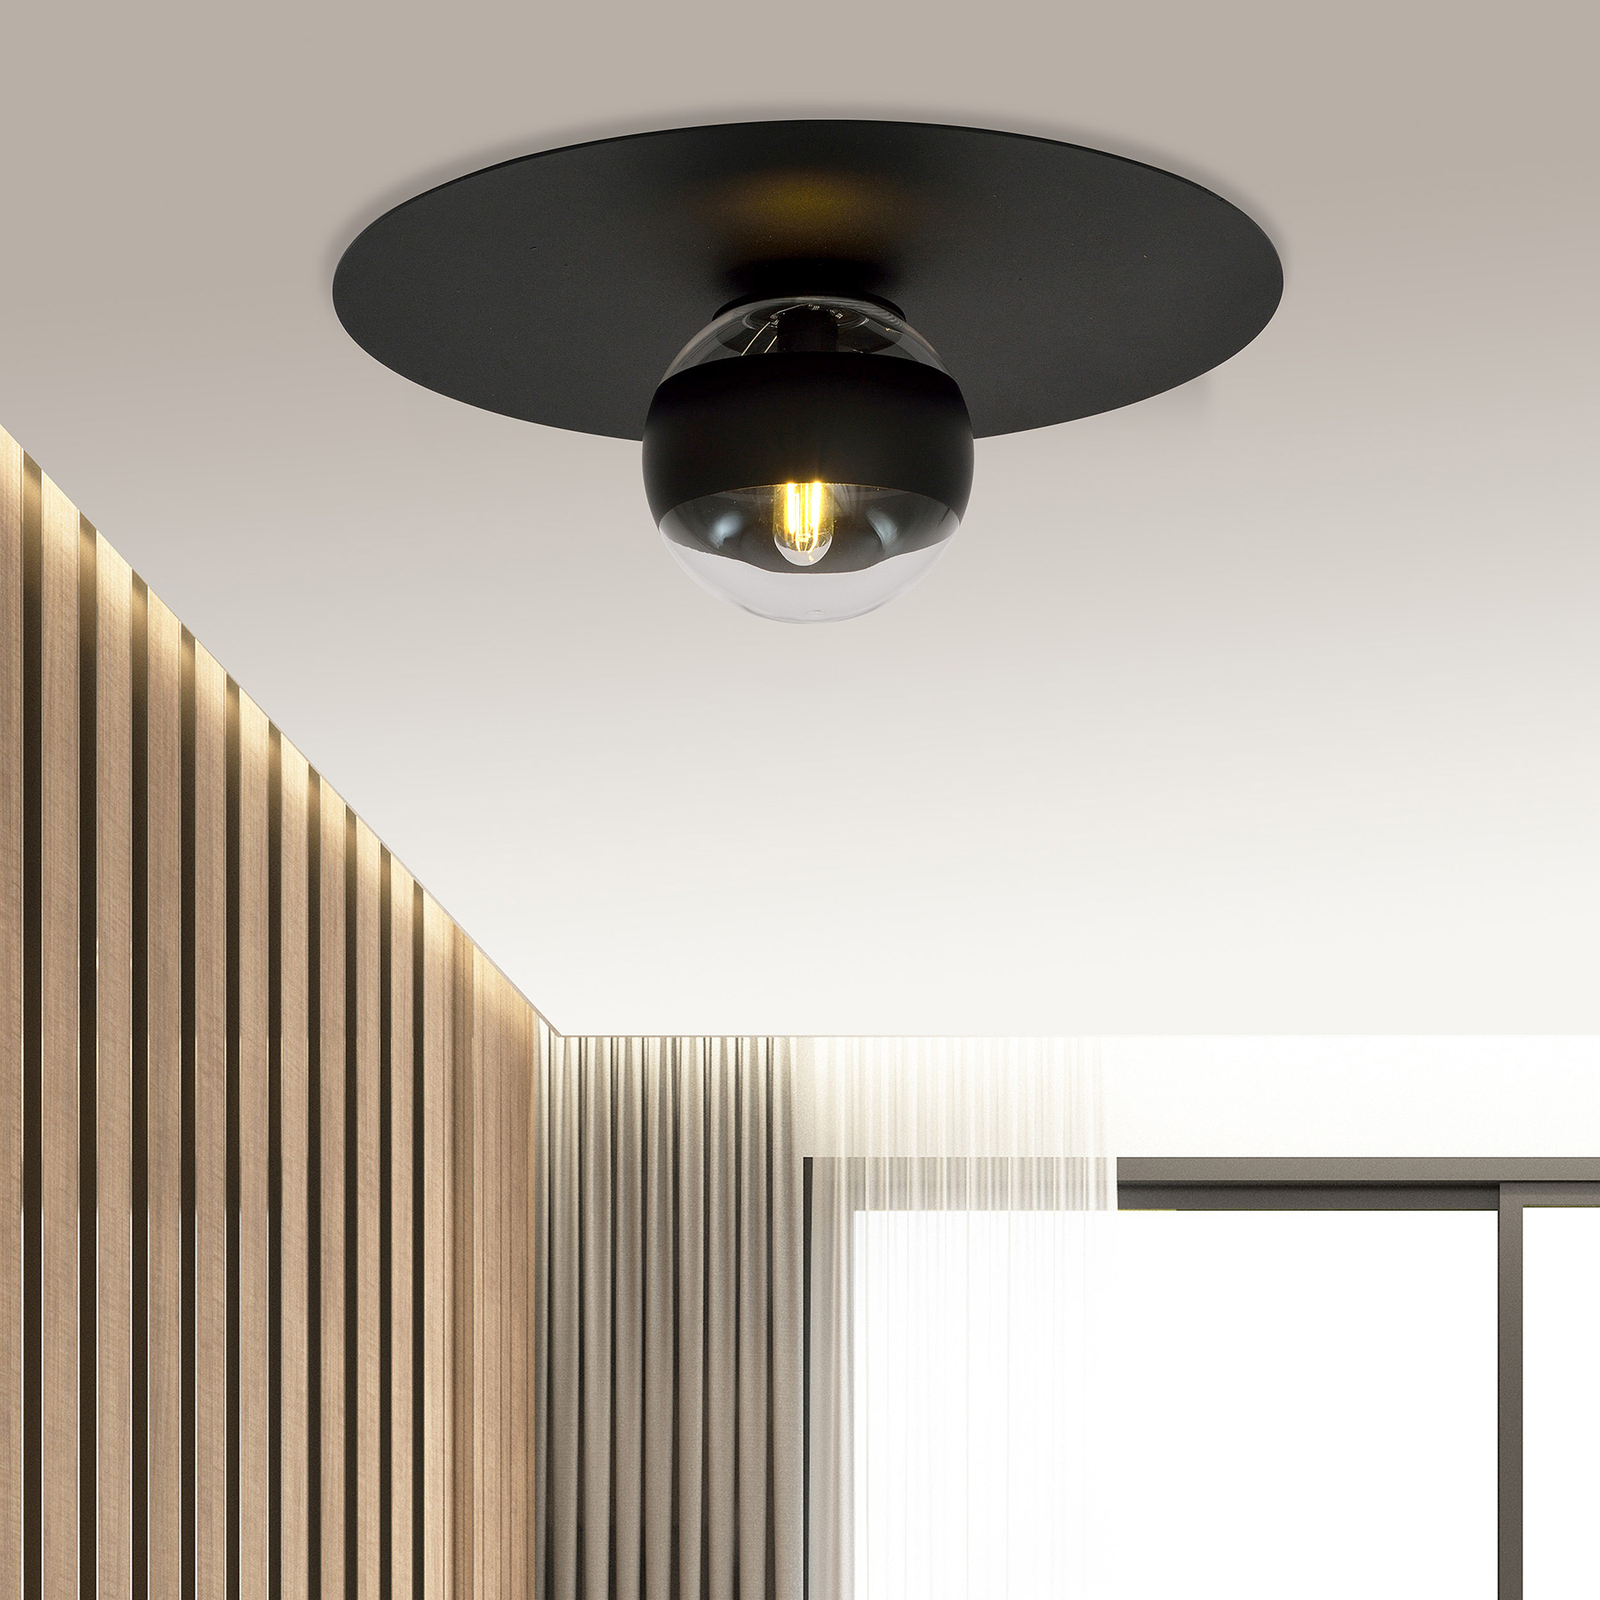 Kenzo ceiling light, black/clear, one-bulb